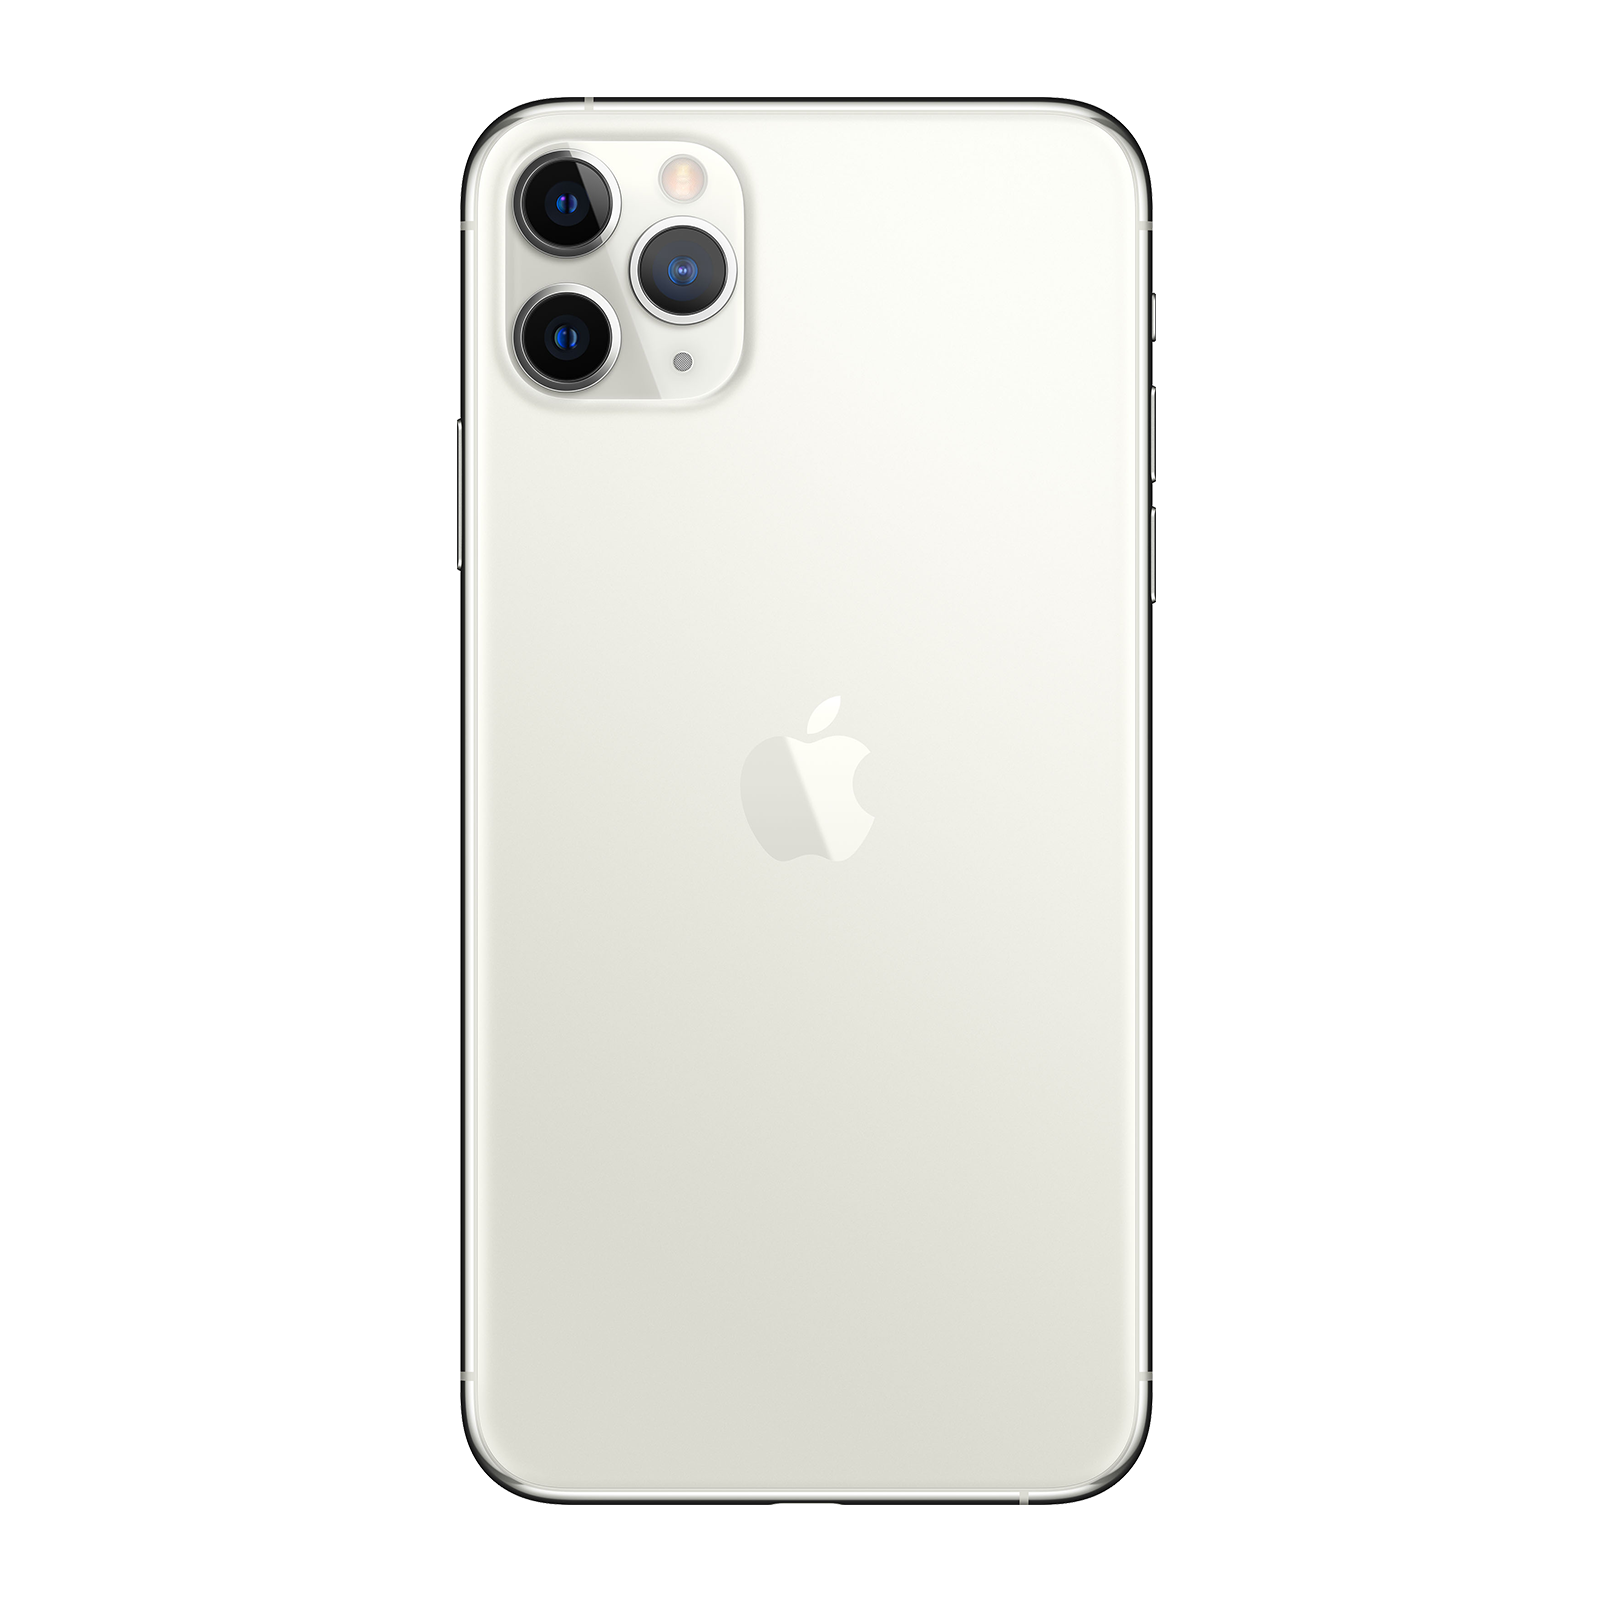 Apple iPhone 11 Pro Max 64GB Silver Pristine - Unlocked